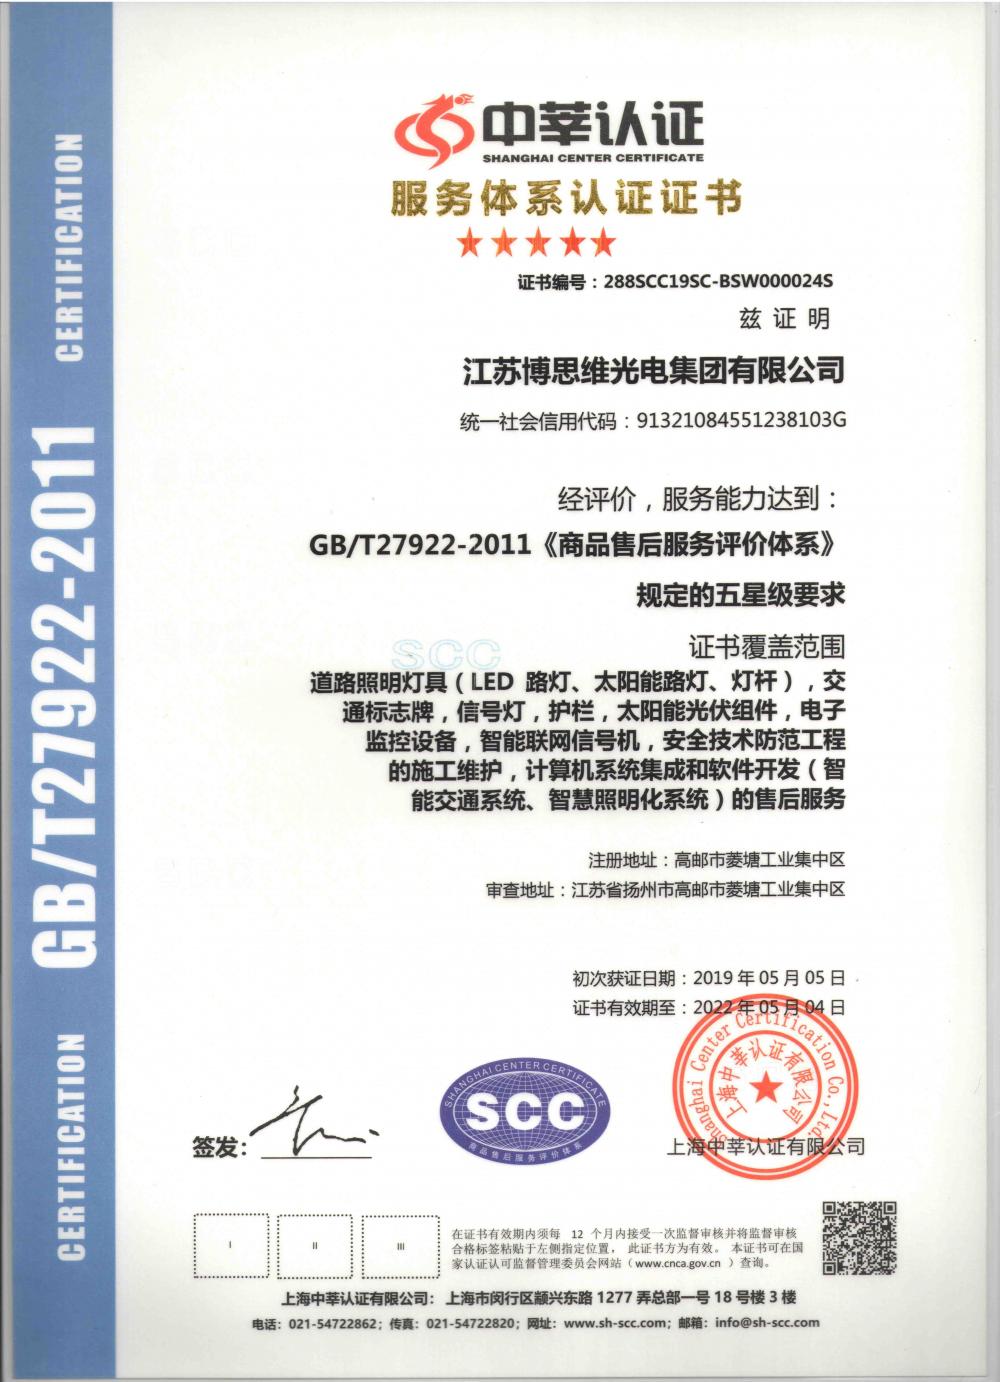 Service system certification